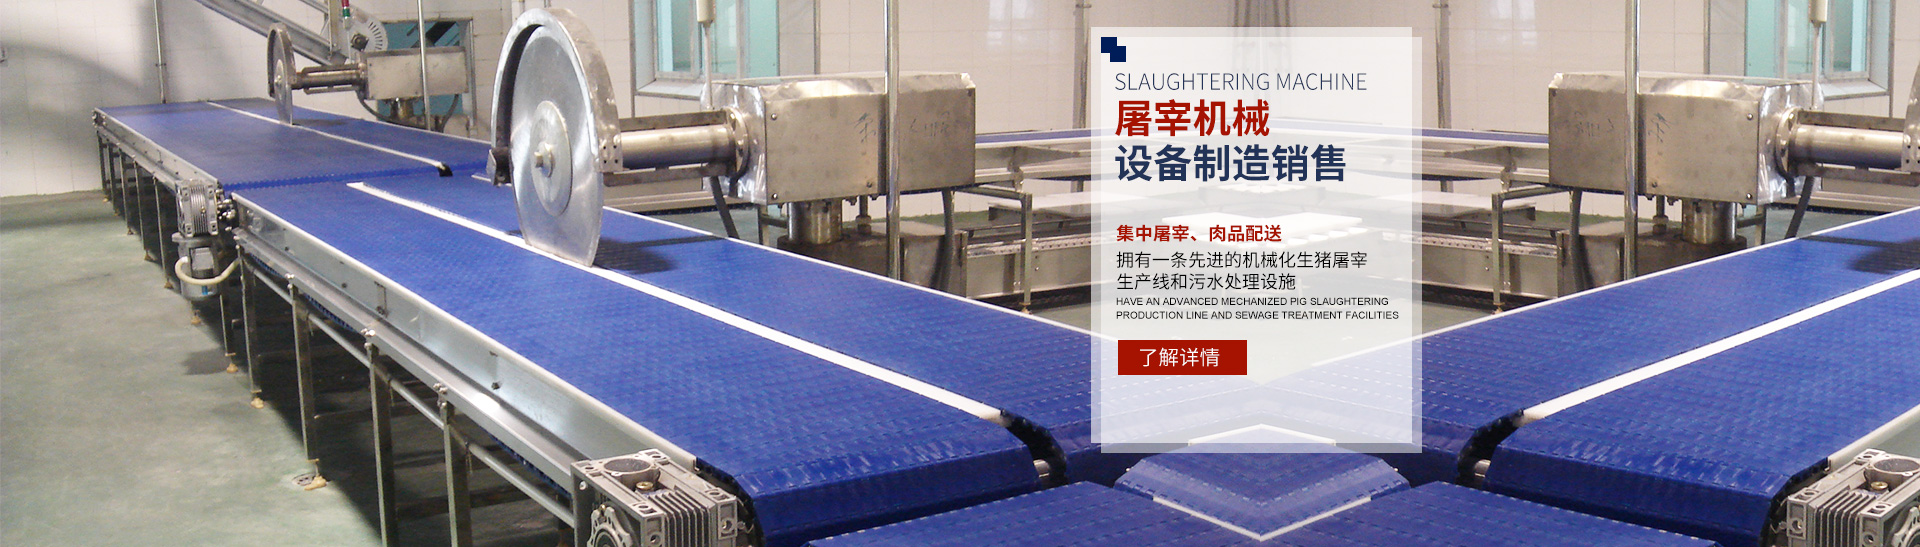 sb体育(中国)有限公司_湖南卧式放血输送机|不锈钢烫毛池销售